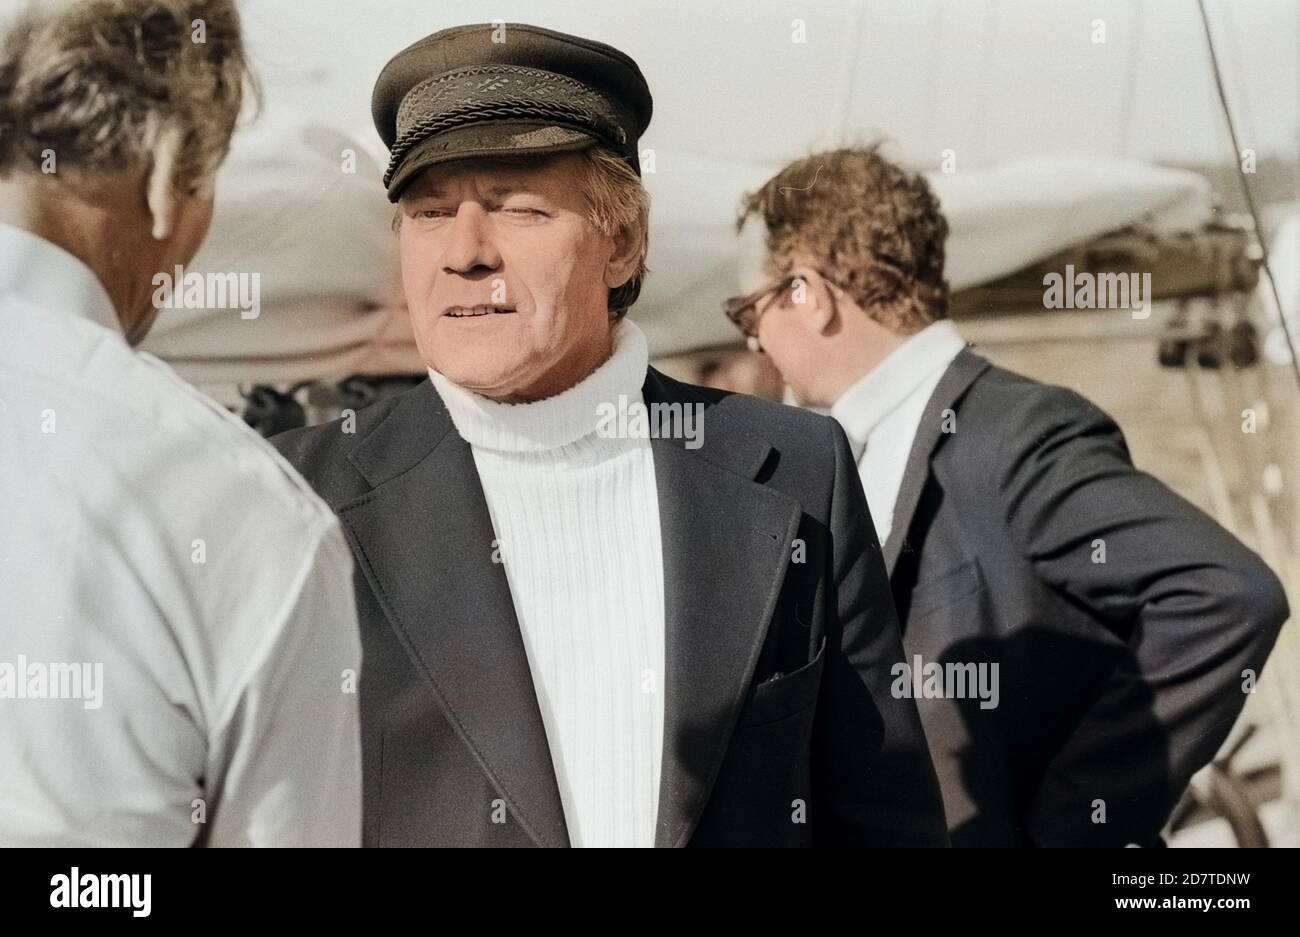 Bundeskanzler Helmut Schmidt beim Landgang nach dem Segeln, Deutschland um 1980. Helmut Schmidt, chancelier allemand sur terre après la voile, Allemagne vers 1980. Banque D'Images